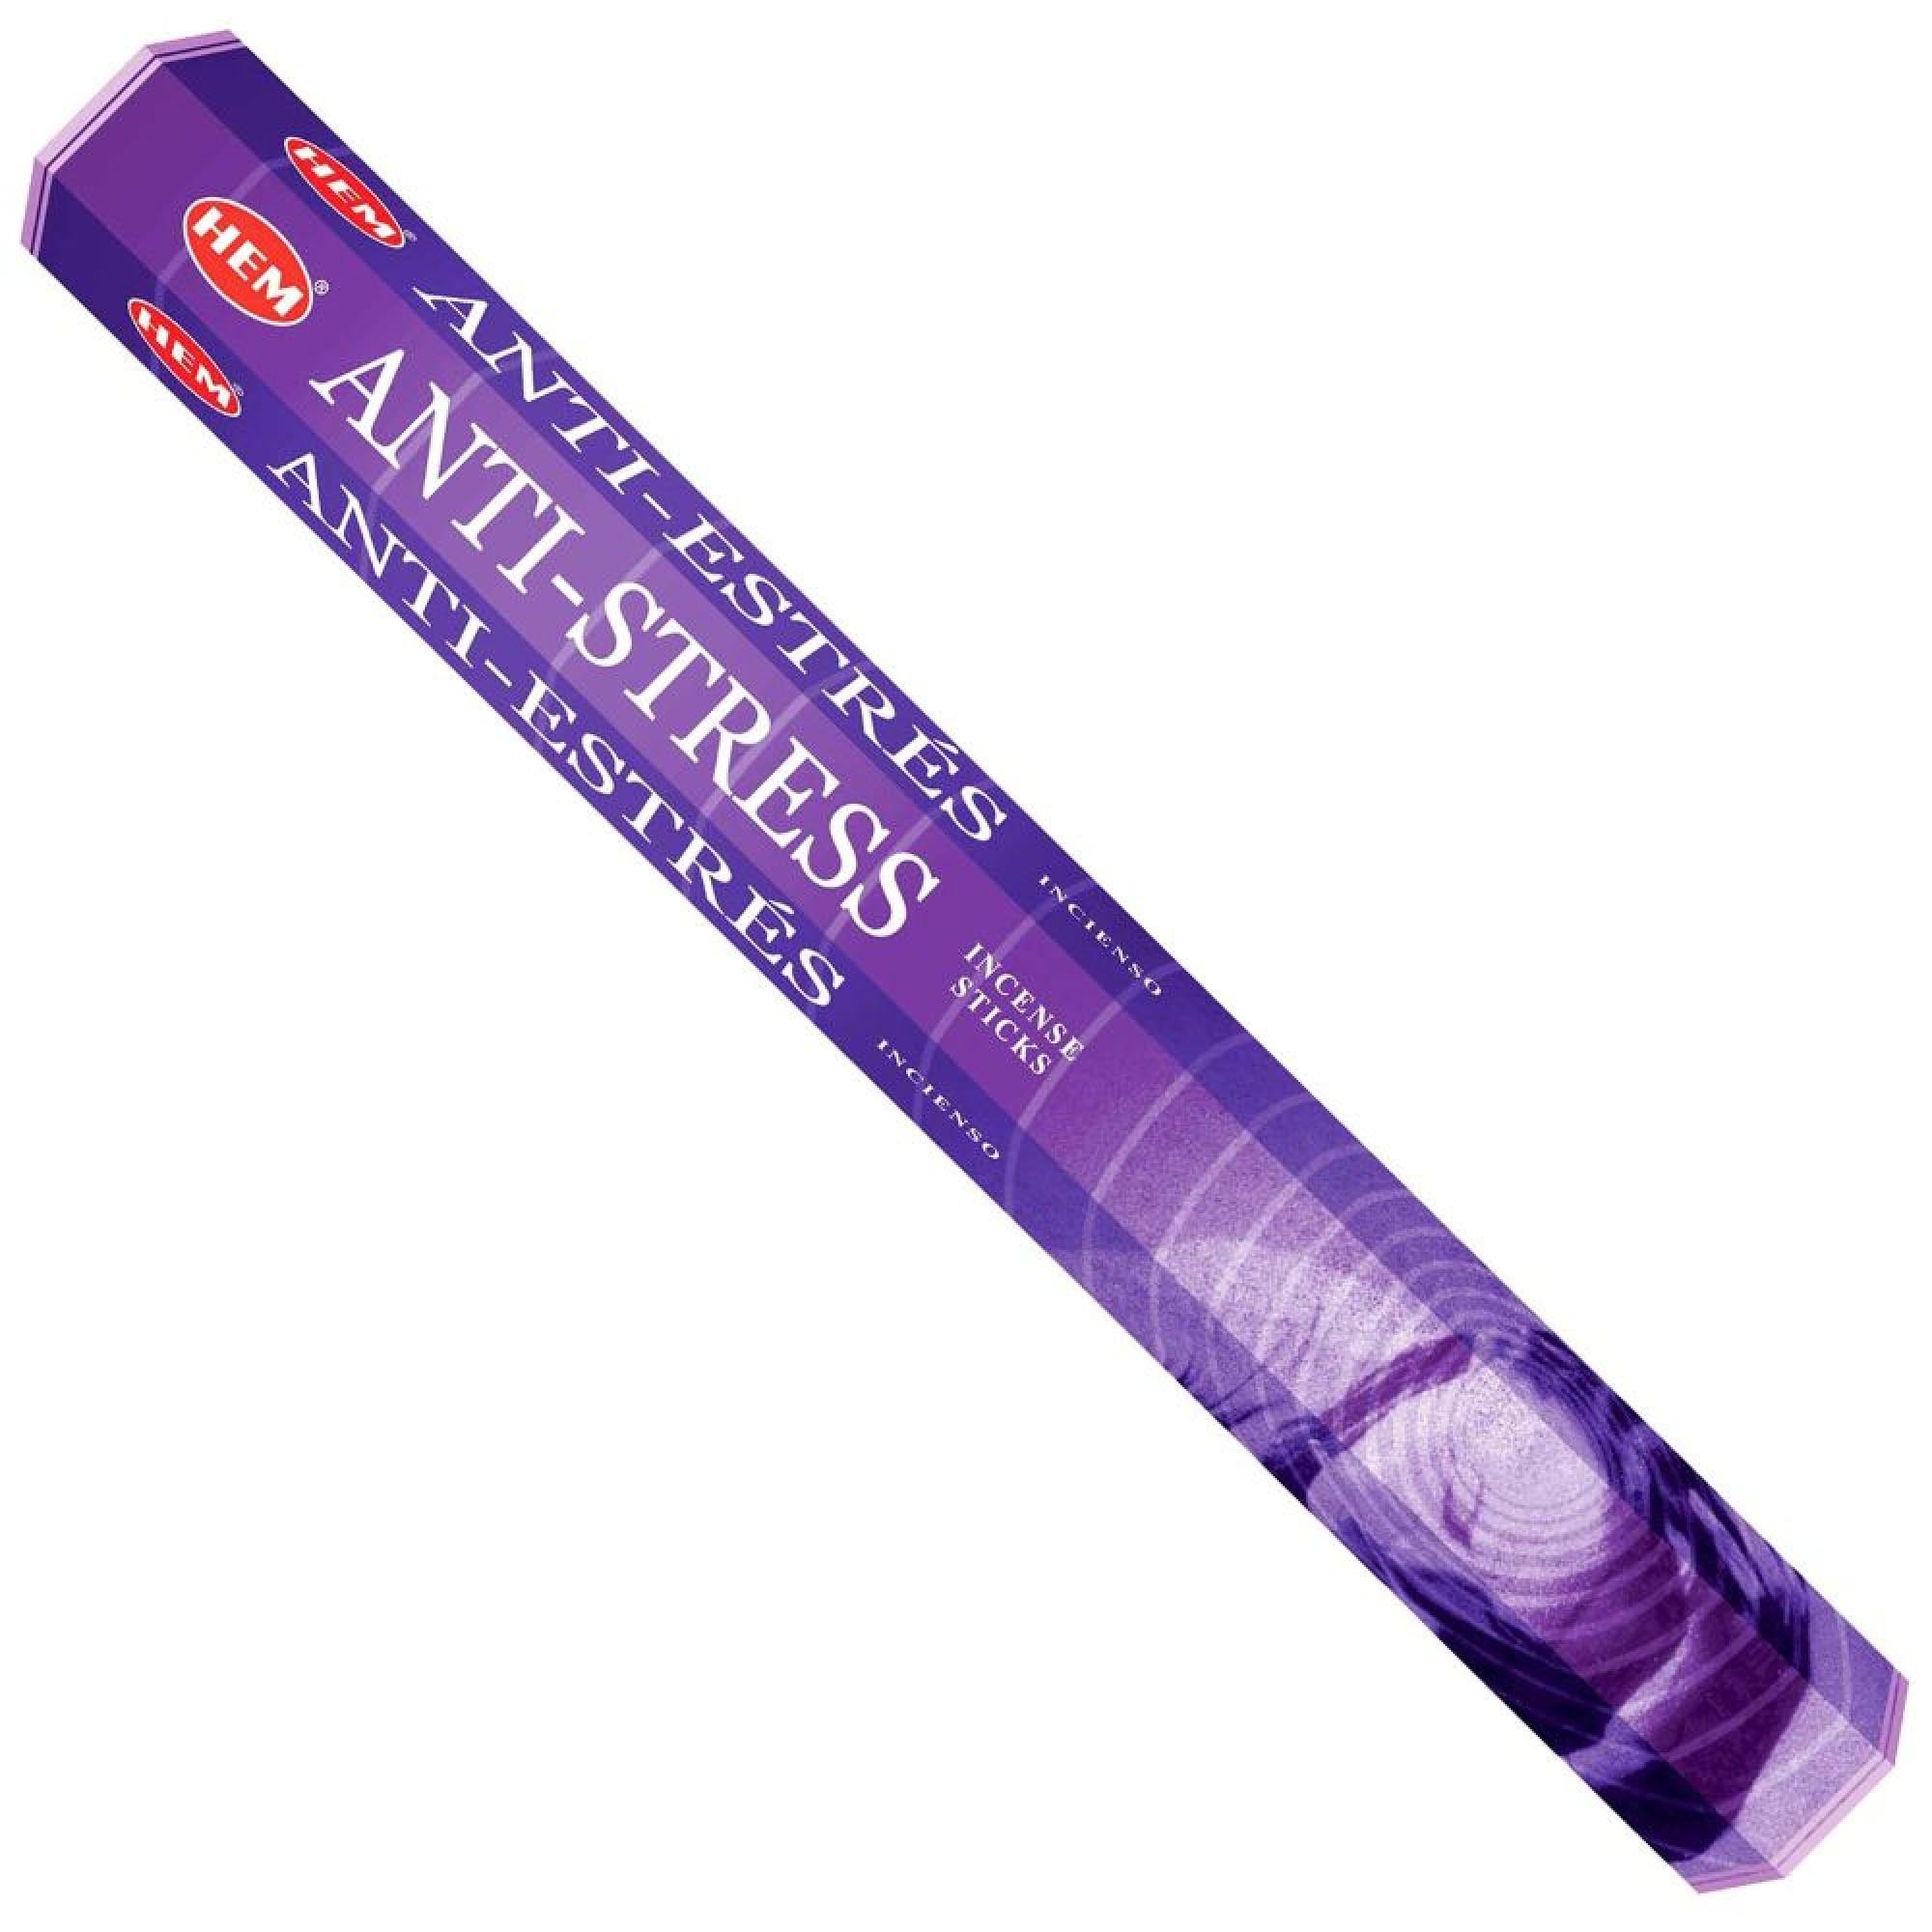 HEM - Hexagon - Anti Stress Incense Sticks